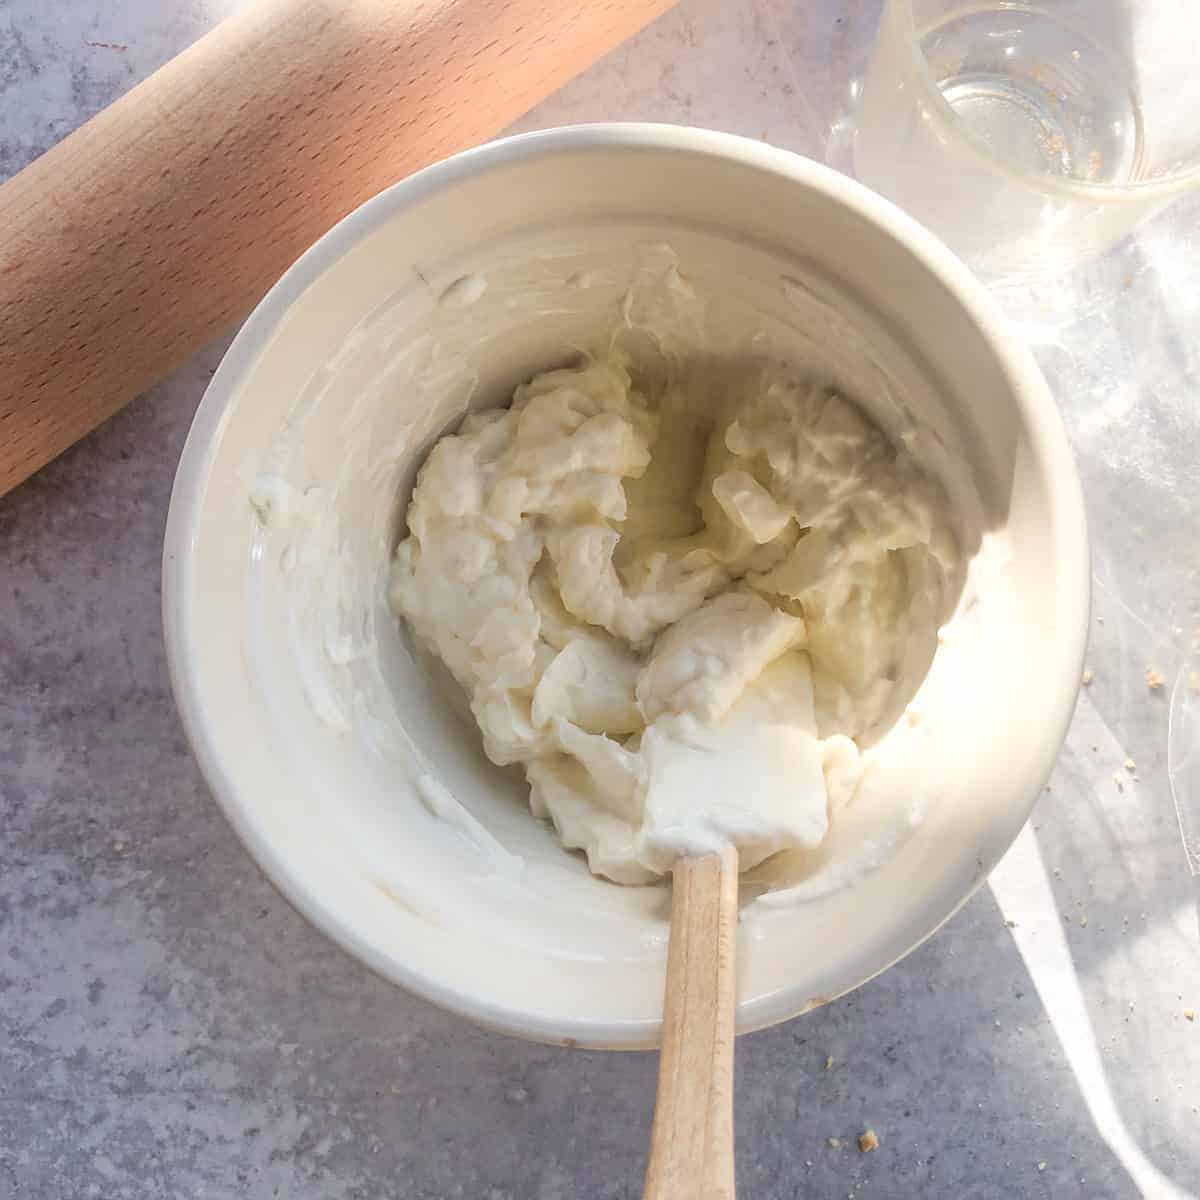 Cream cheese filing in white bowl.